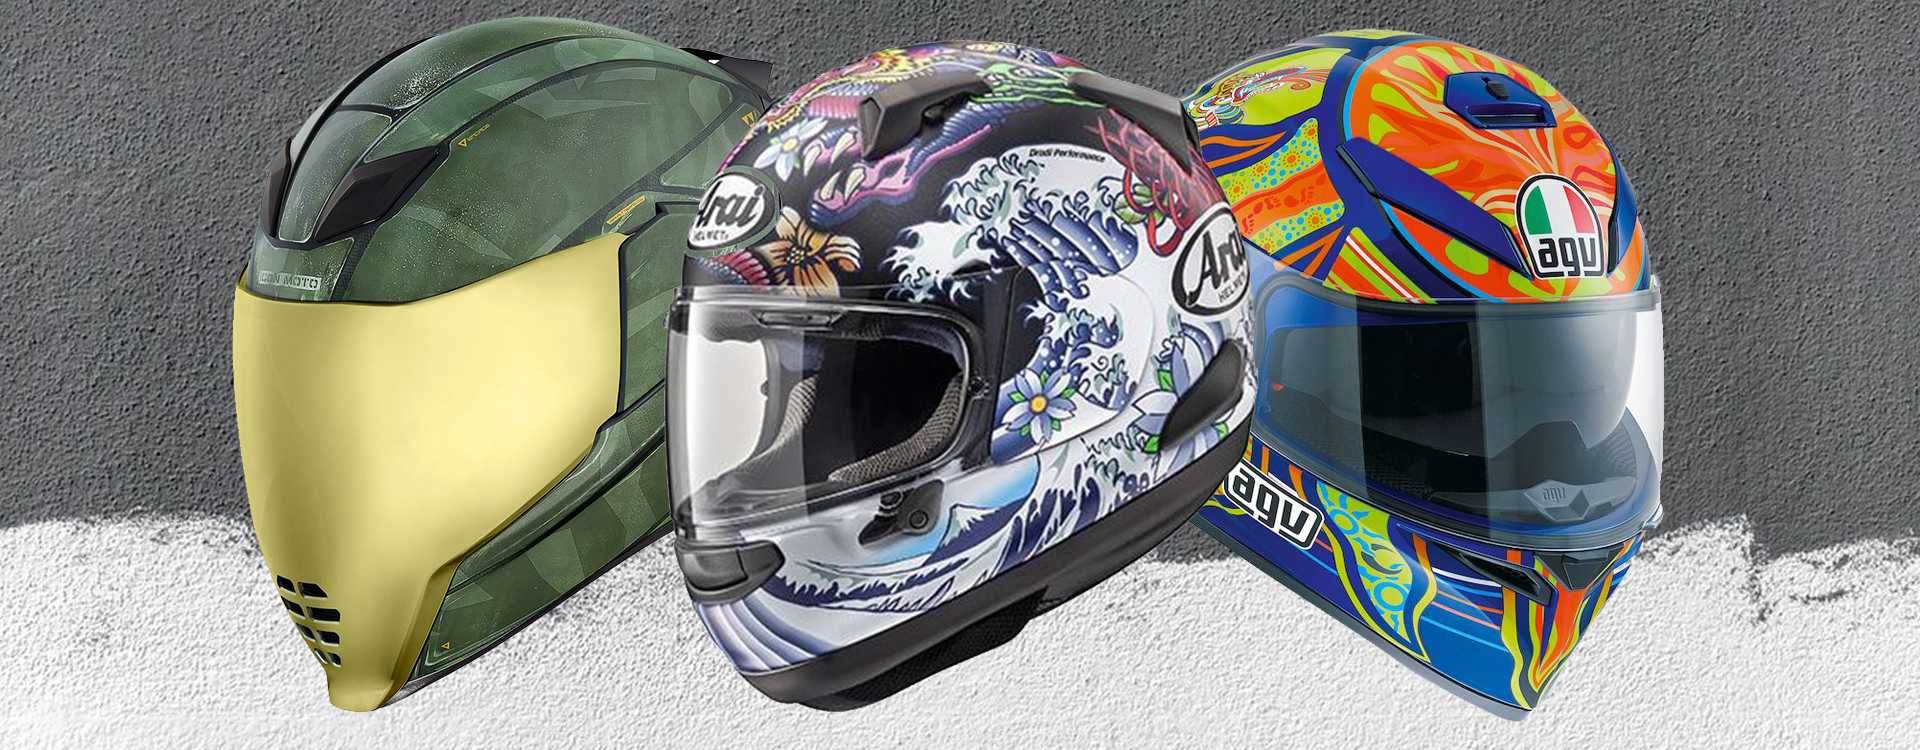 14 Helmets With Badass Graphics